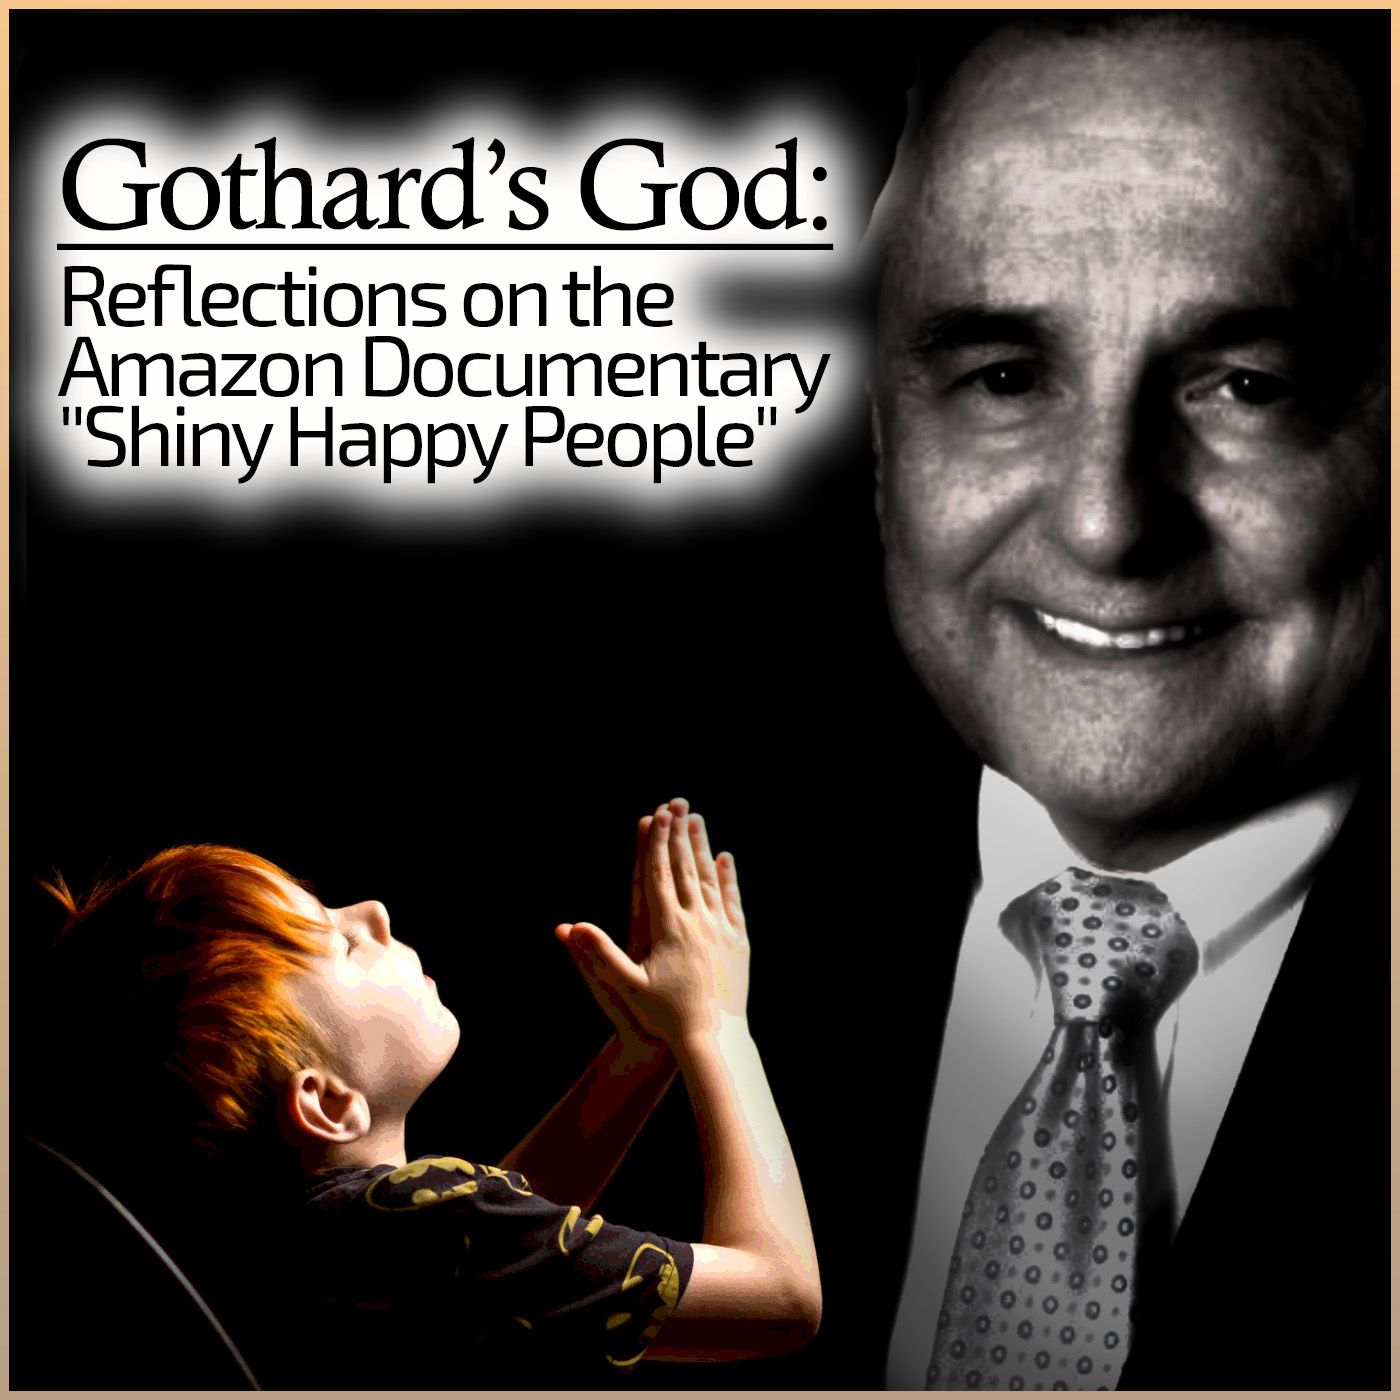 Gothard’s God: Reflections on the Amazon Documentary ”Shiny Happy People”